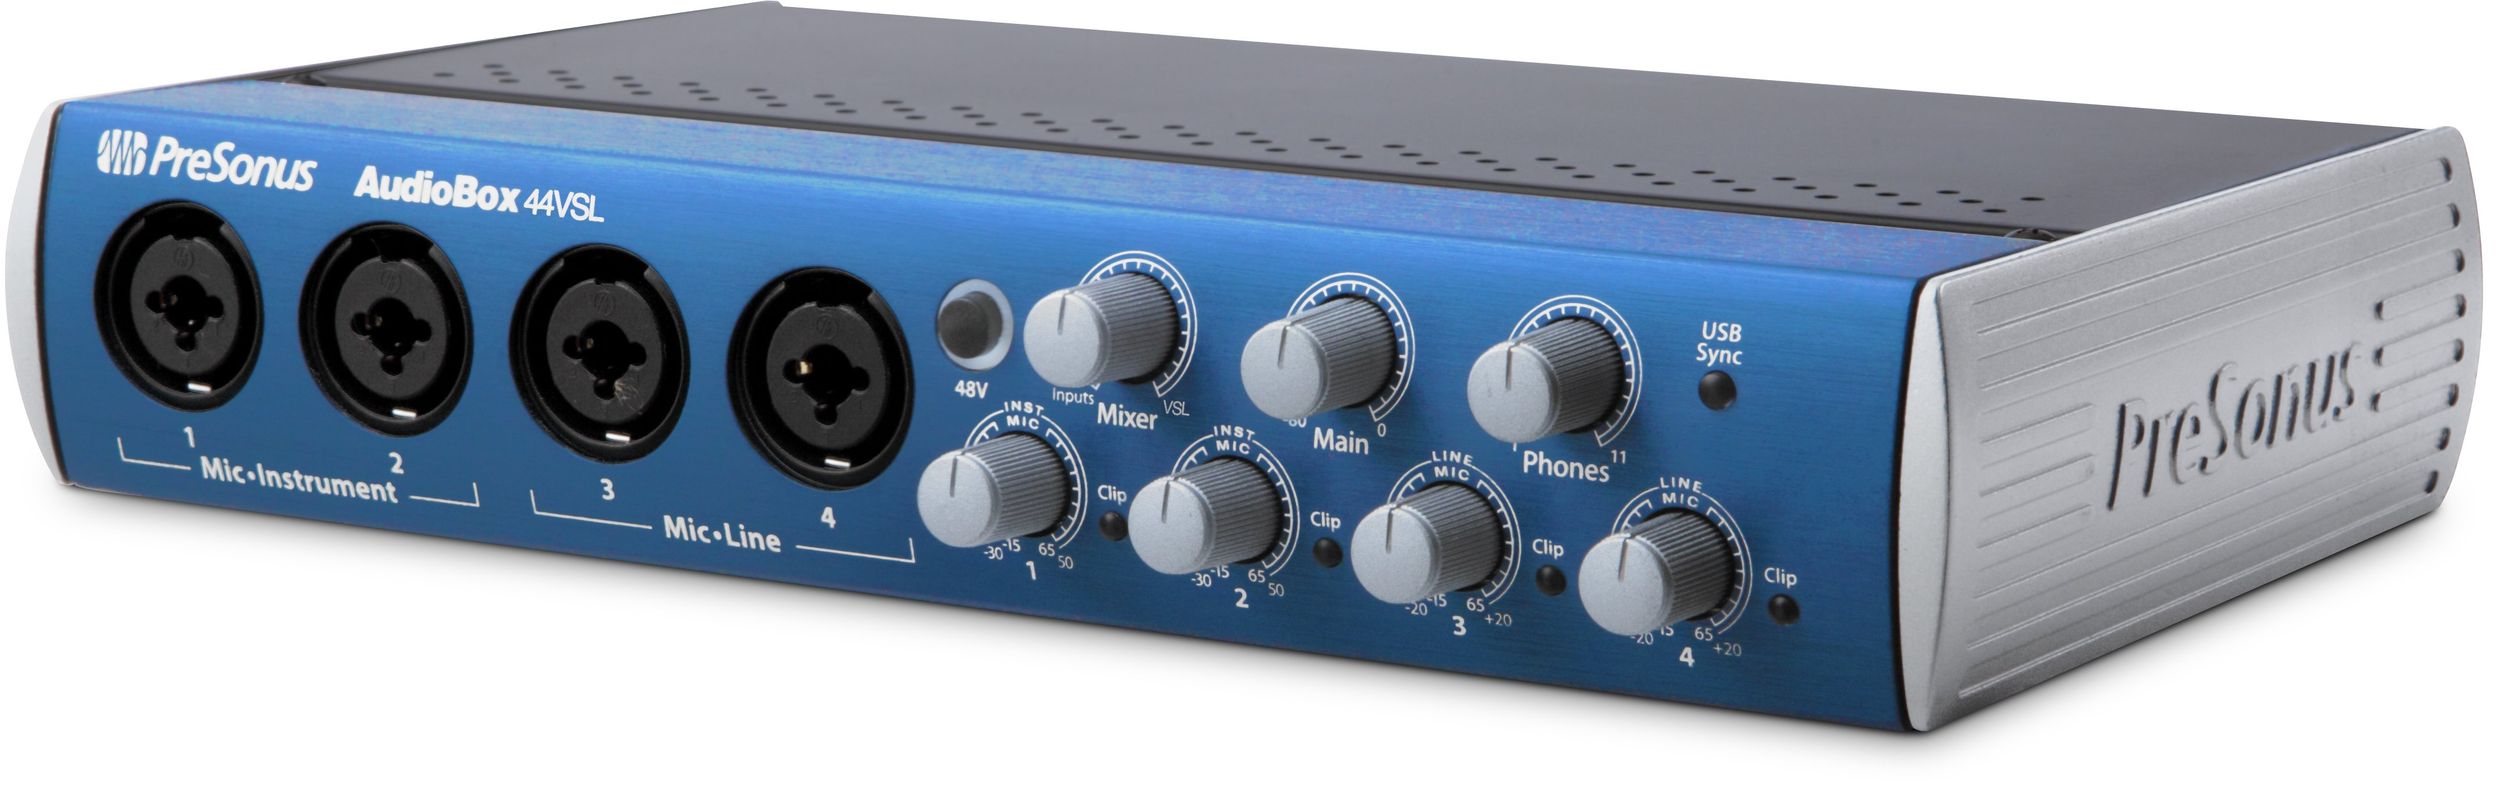 AudioBox 44VSL - PreSonus AudioBox 44VSL - Audiofanzine